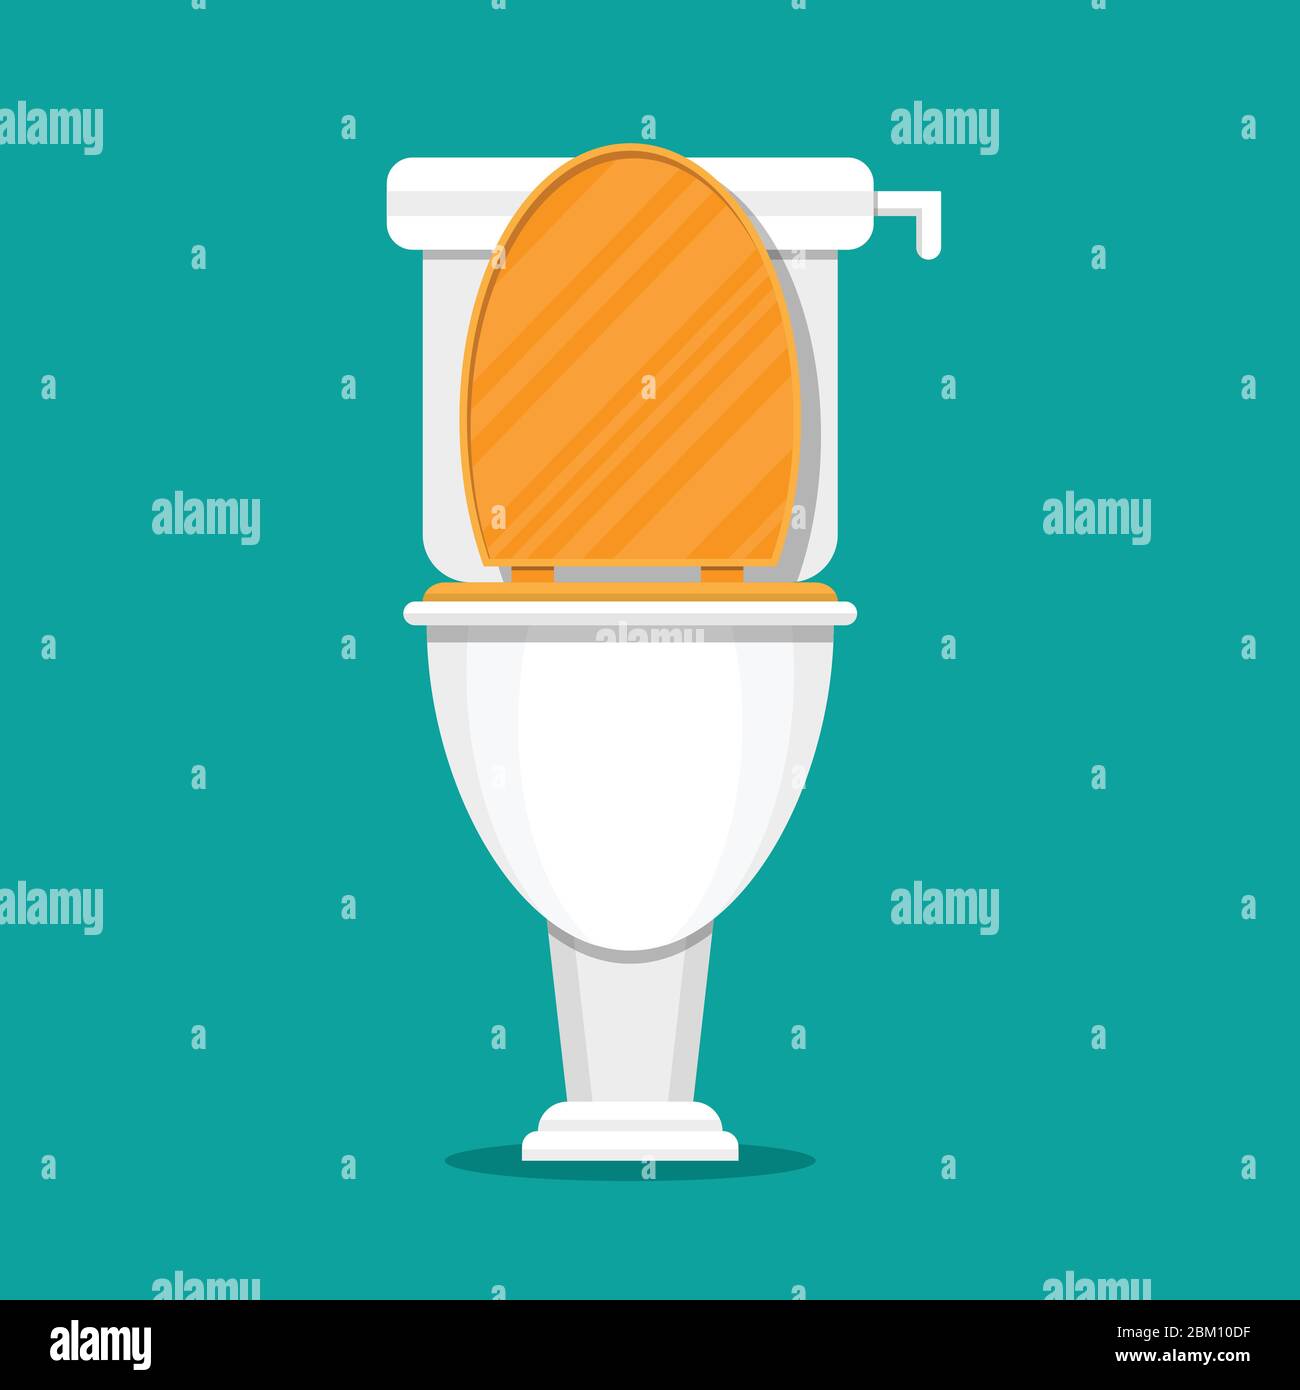 Toilet vector illustration in flat design. Stock Vector